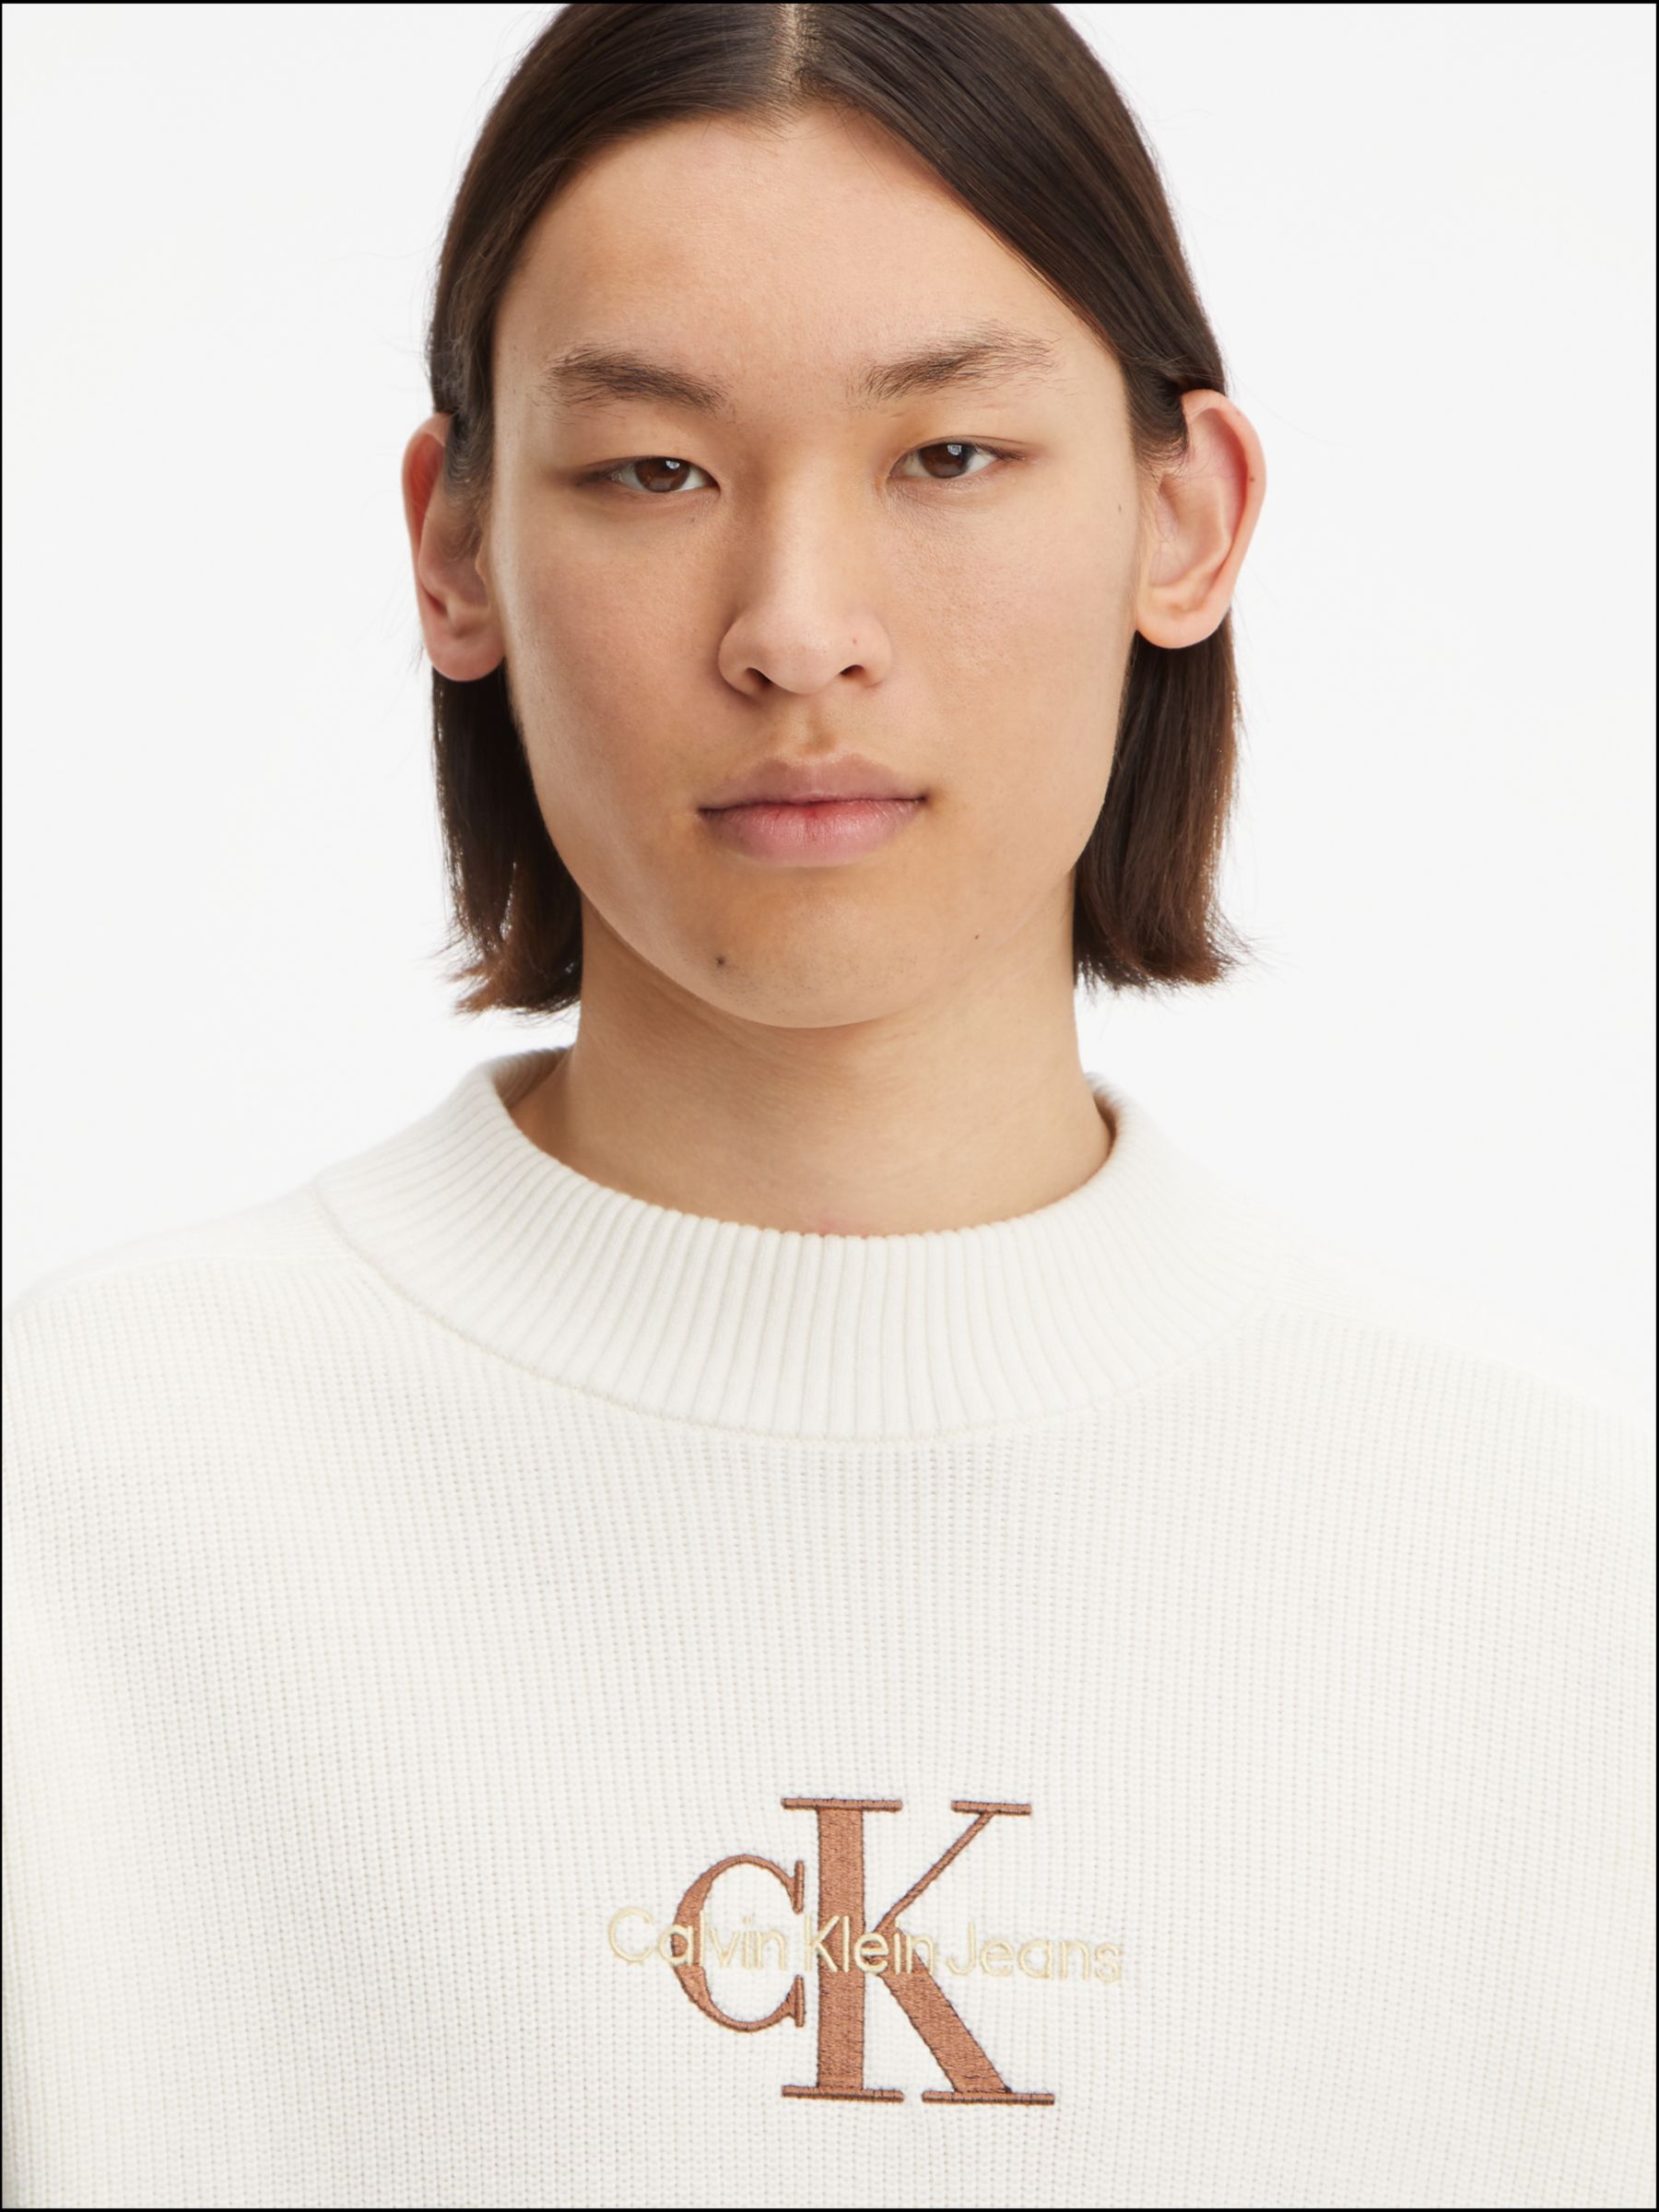 Core Monogram Logo Sweatshirt by Calvin Klein Jeans Online, THE ICONIC